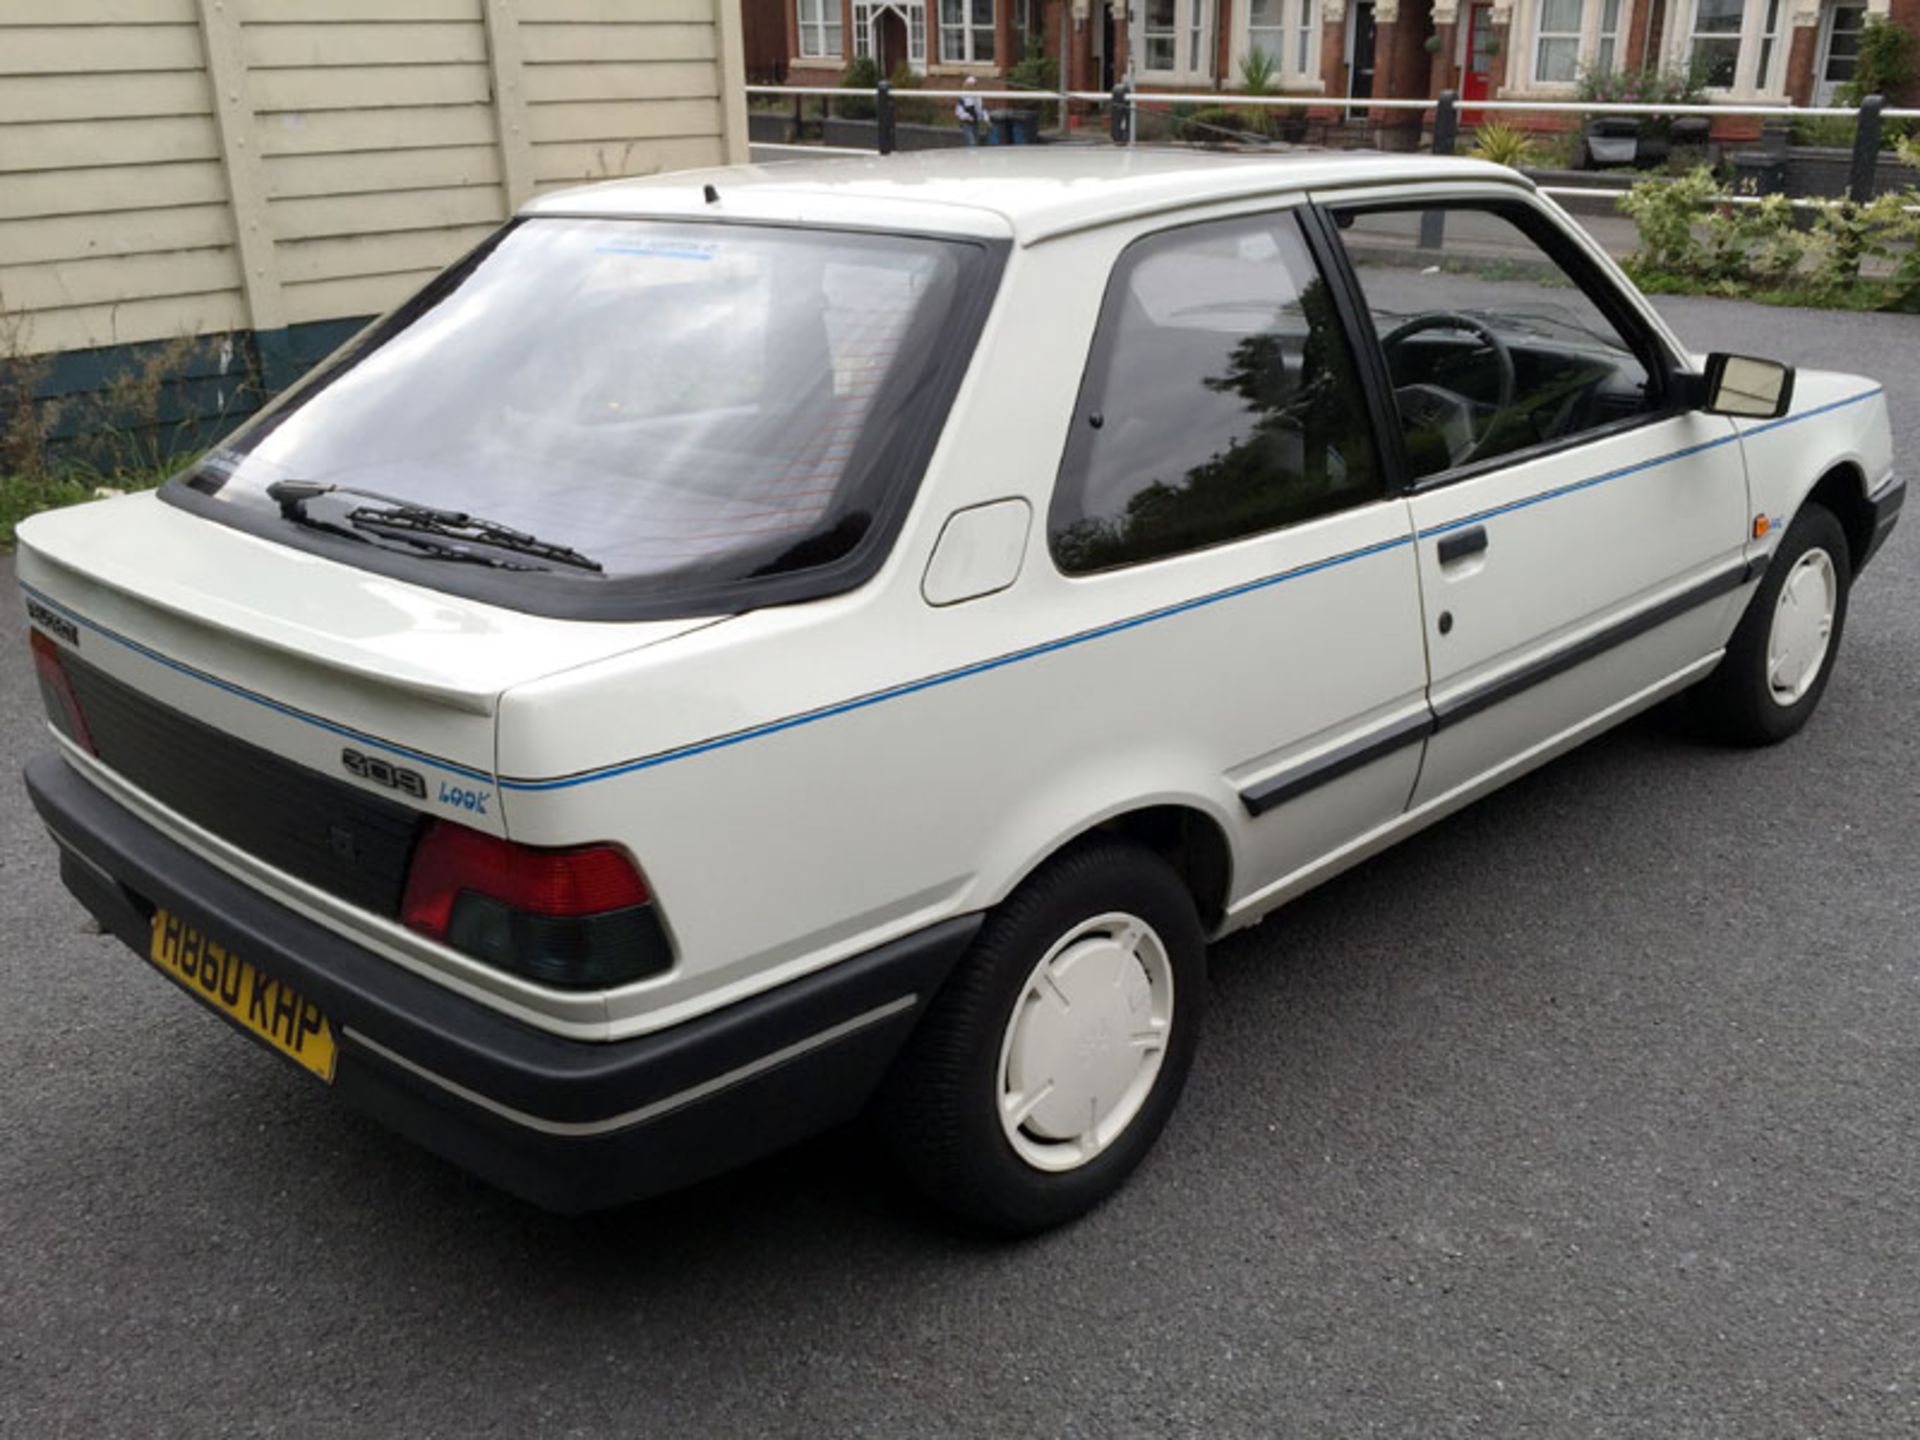 1991 Peugeot 309 Look - Image 2 of 4